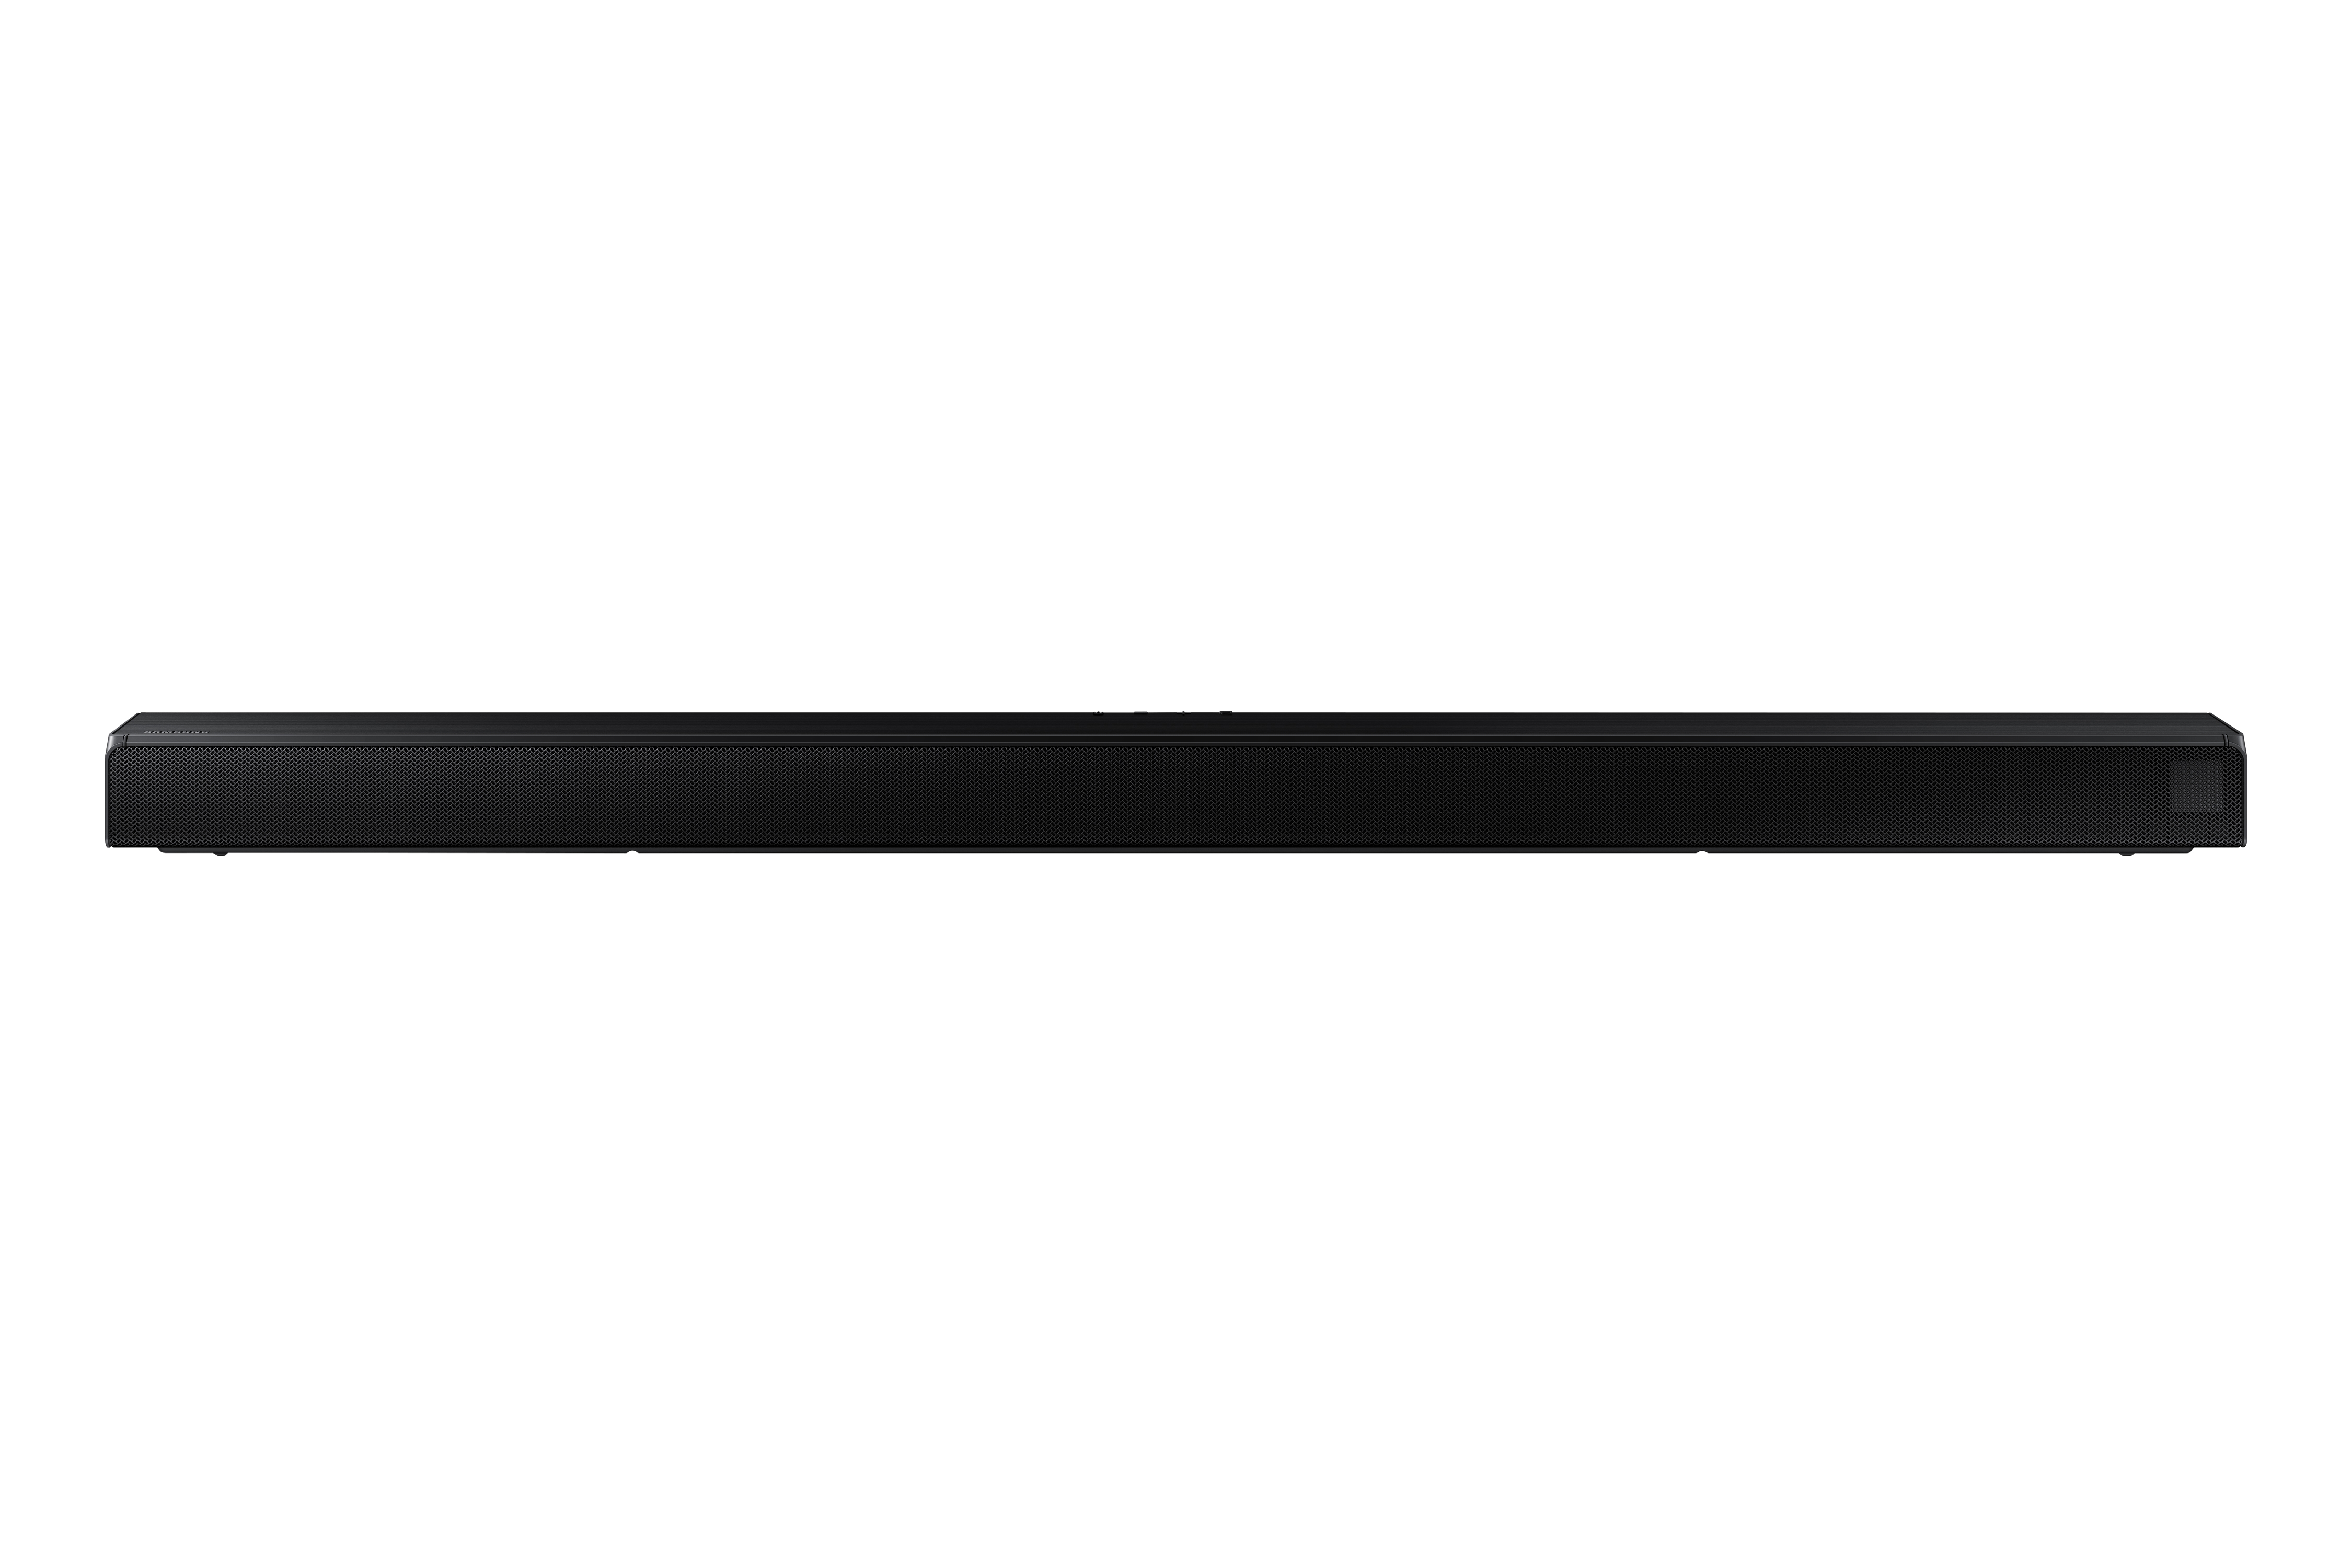 SAMSUNG 310W 3.1ch Soundbar with Wireless Subwoofer - HW-T60M (2020) - image 5 of 10